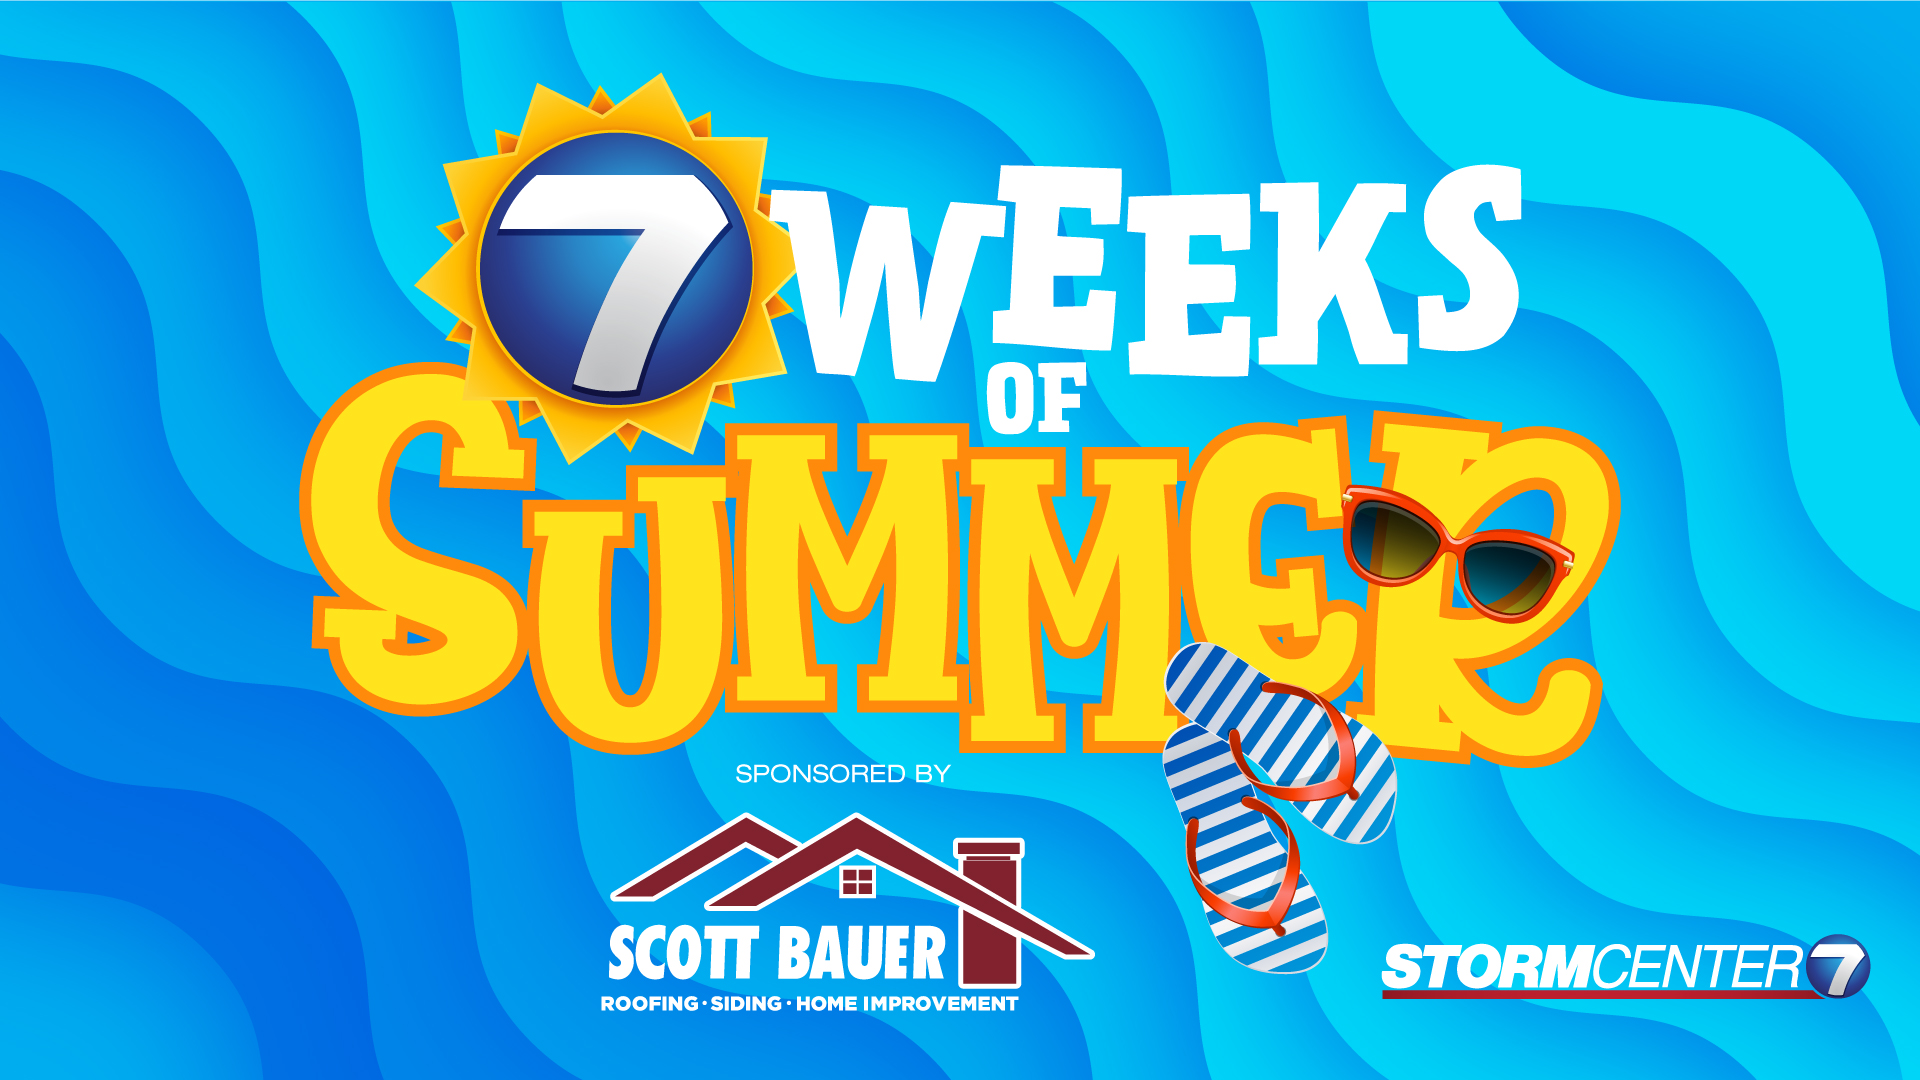 Storm Center 7 Seven Weeks of Summer